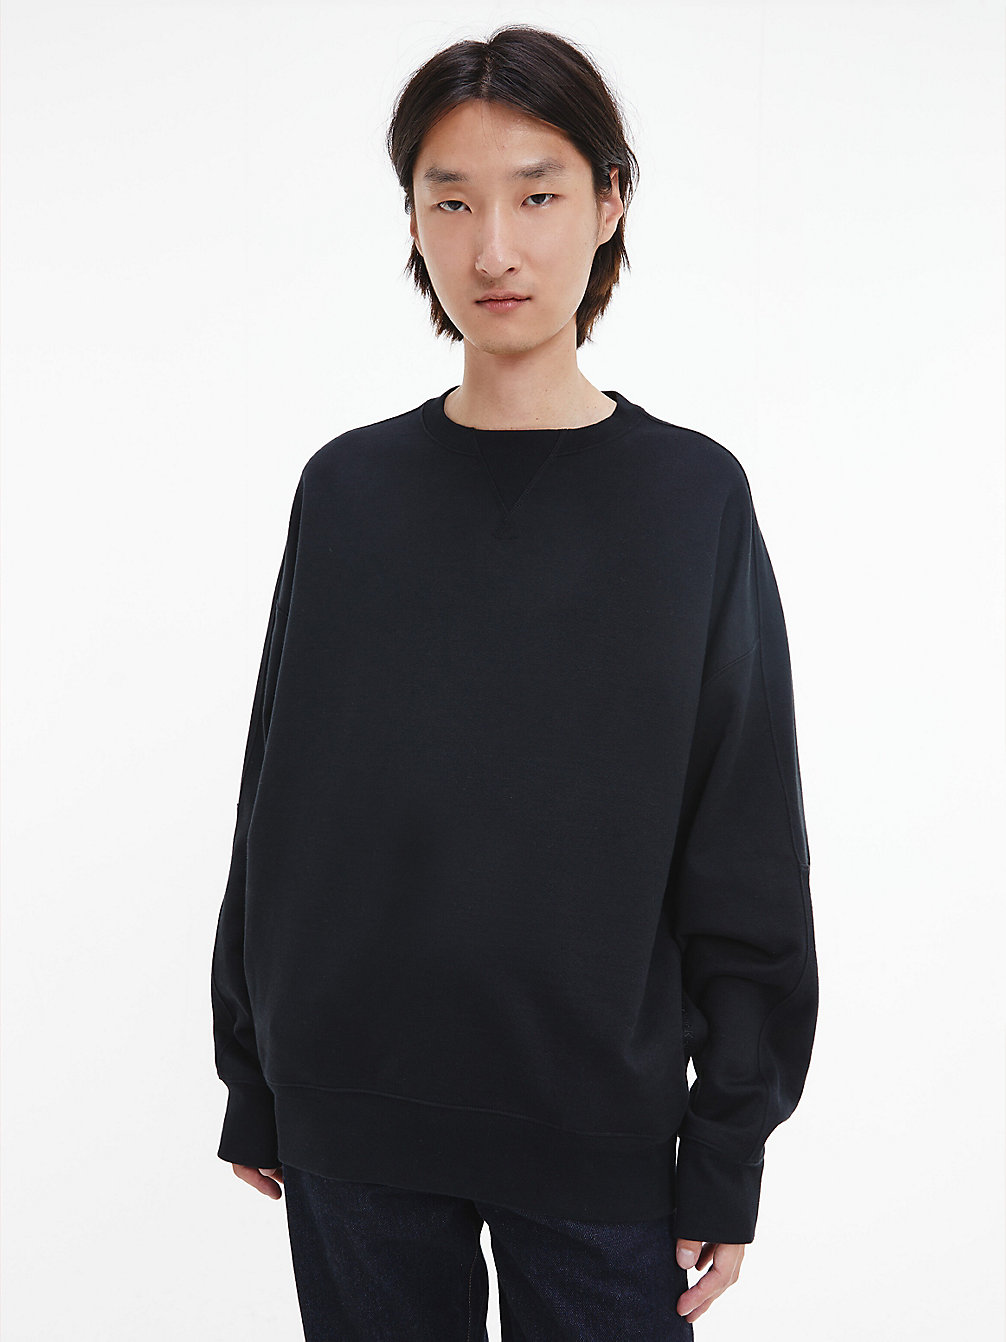 BLACK BEAUTY Unisex Relaxed Sweatshirt - CK Standards undefined unisex Calvin Klein